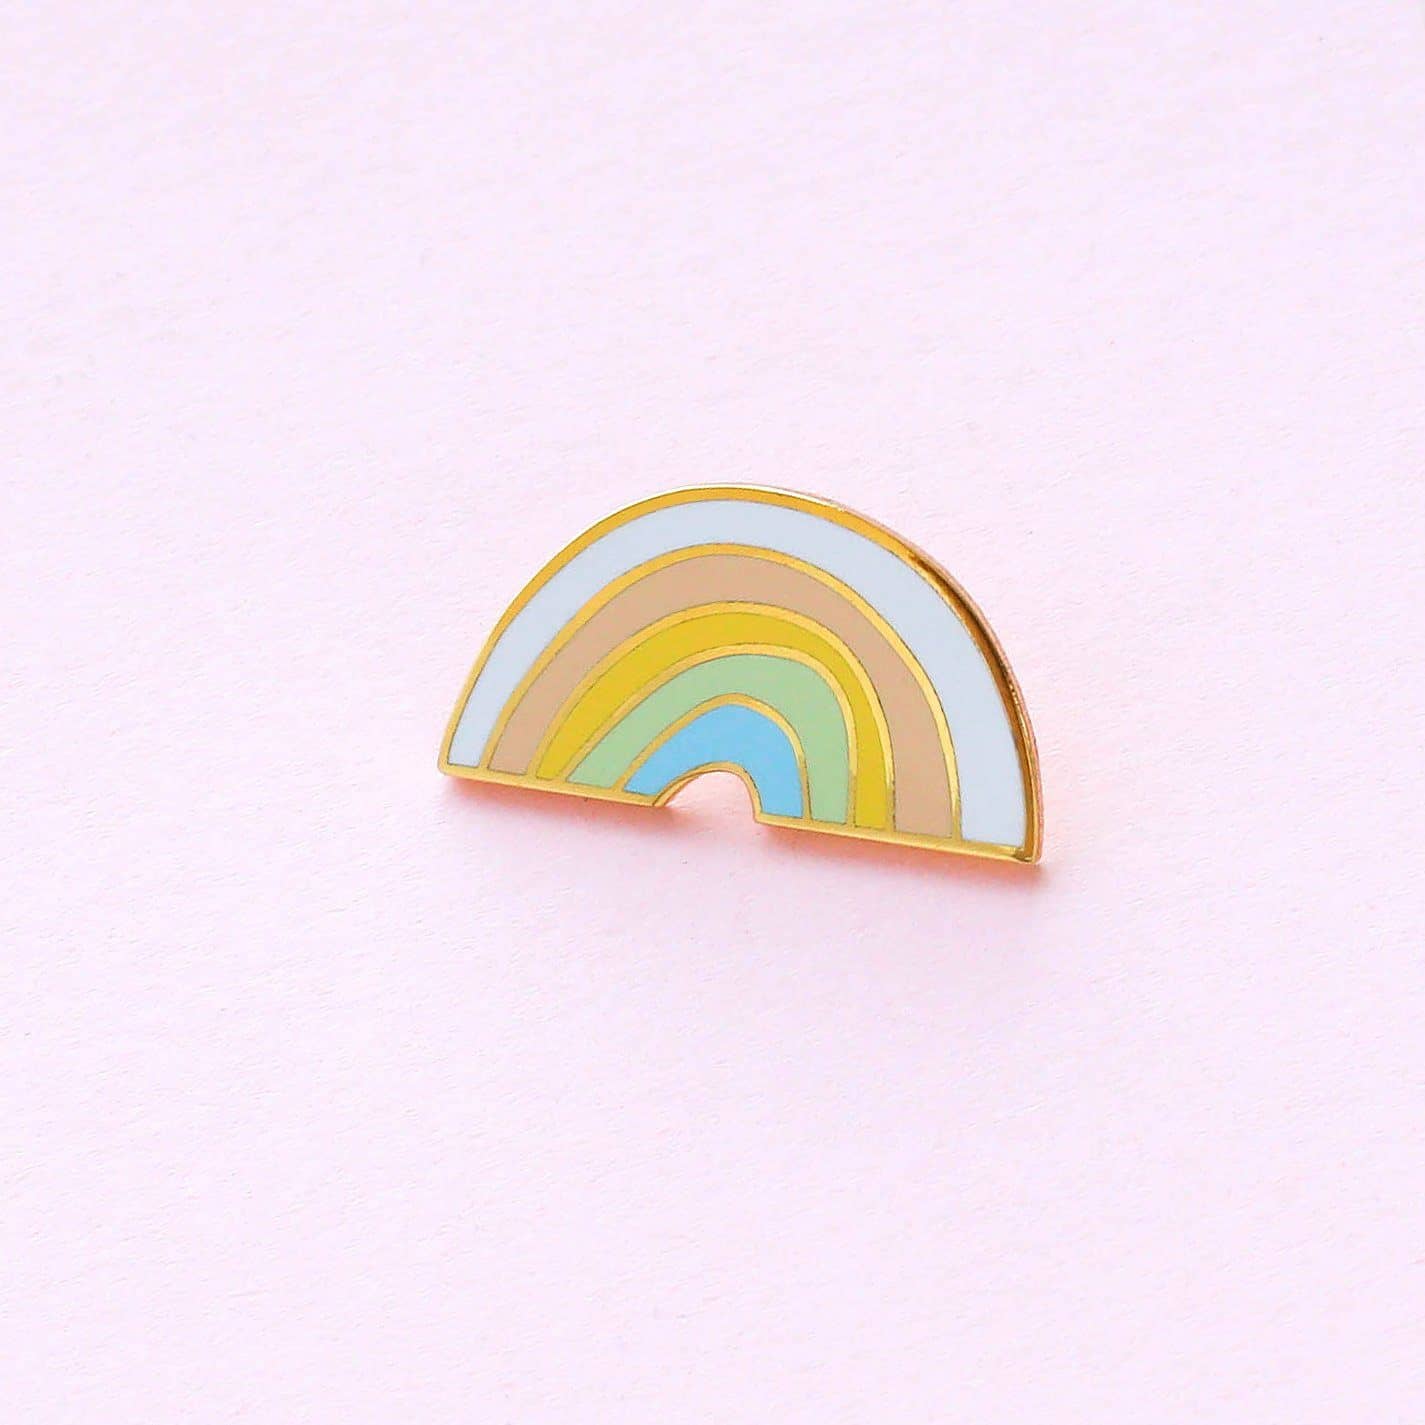 Rainbow Enamel Pin Badge